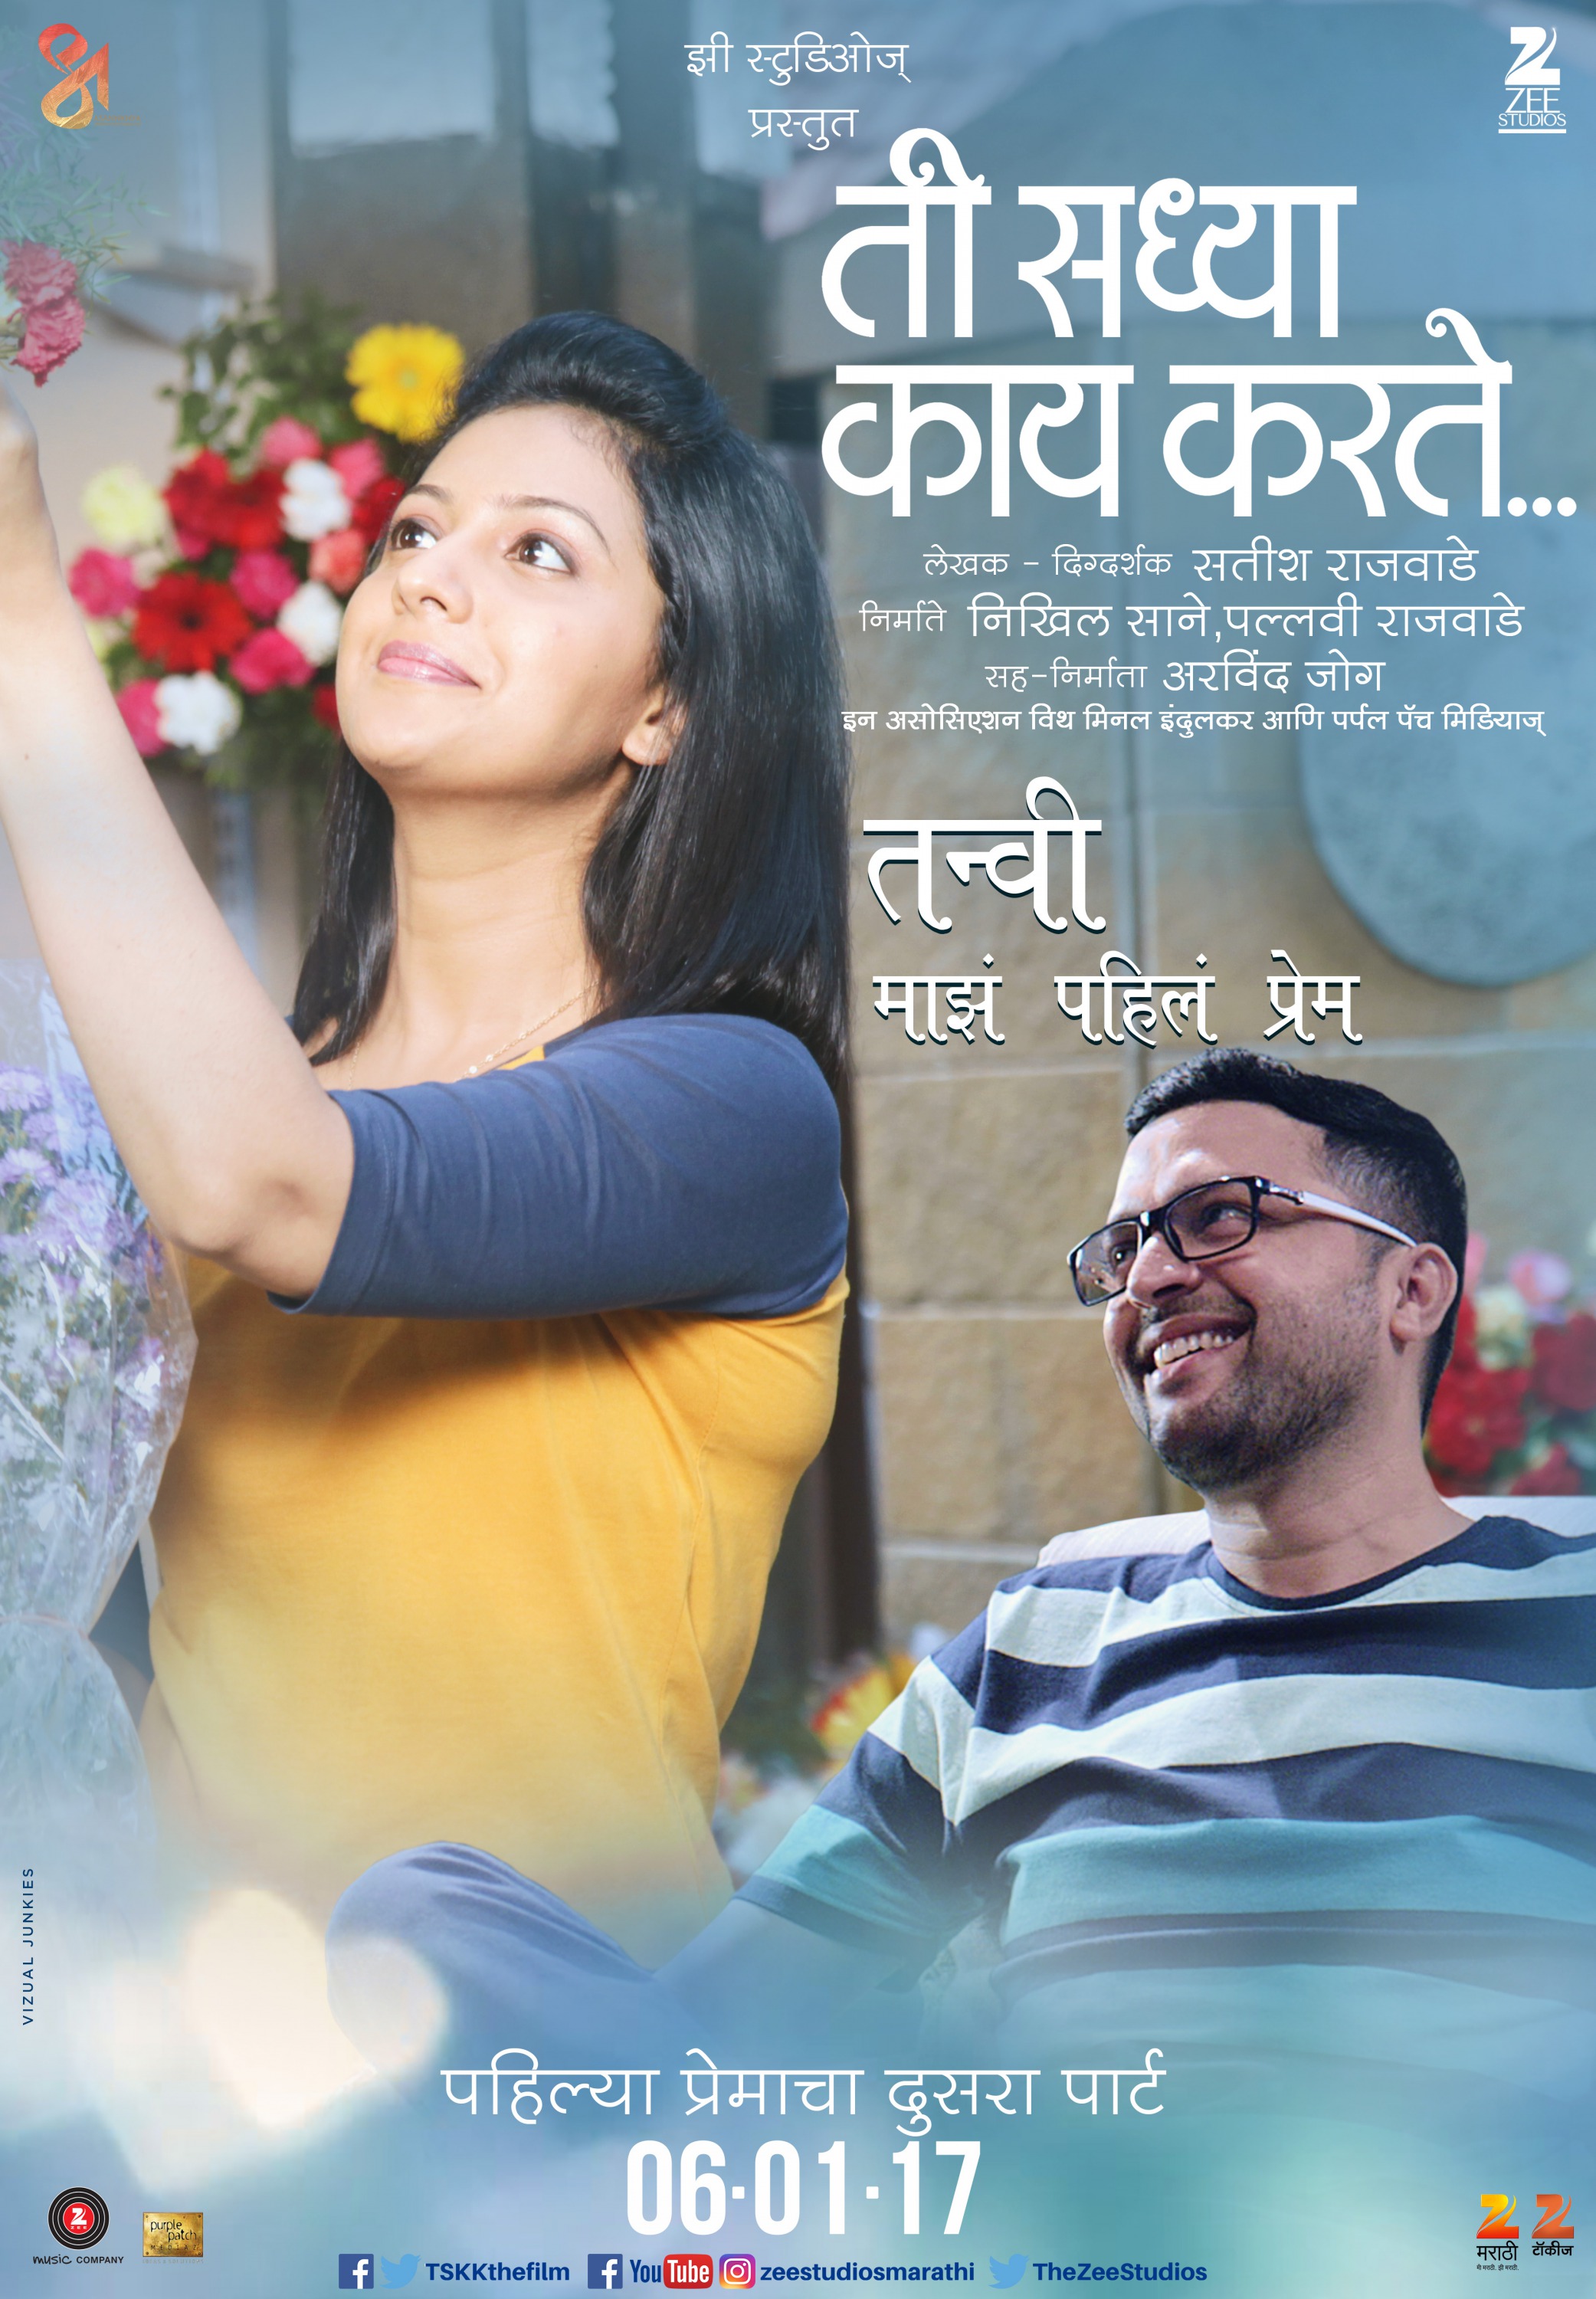 Mega Sized Movie Poster Image for Ti Saddhya Kay Karte (#10 of 10)